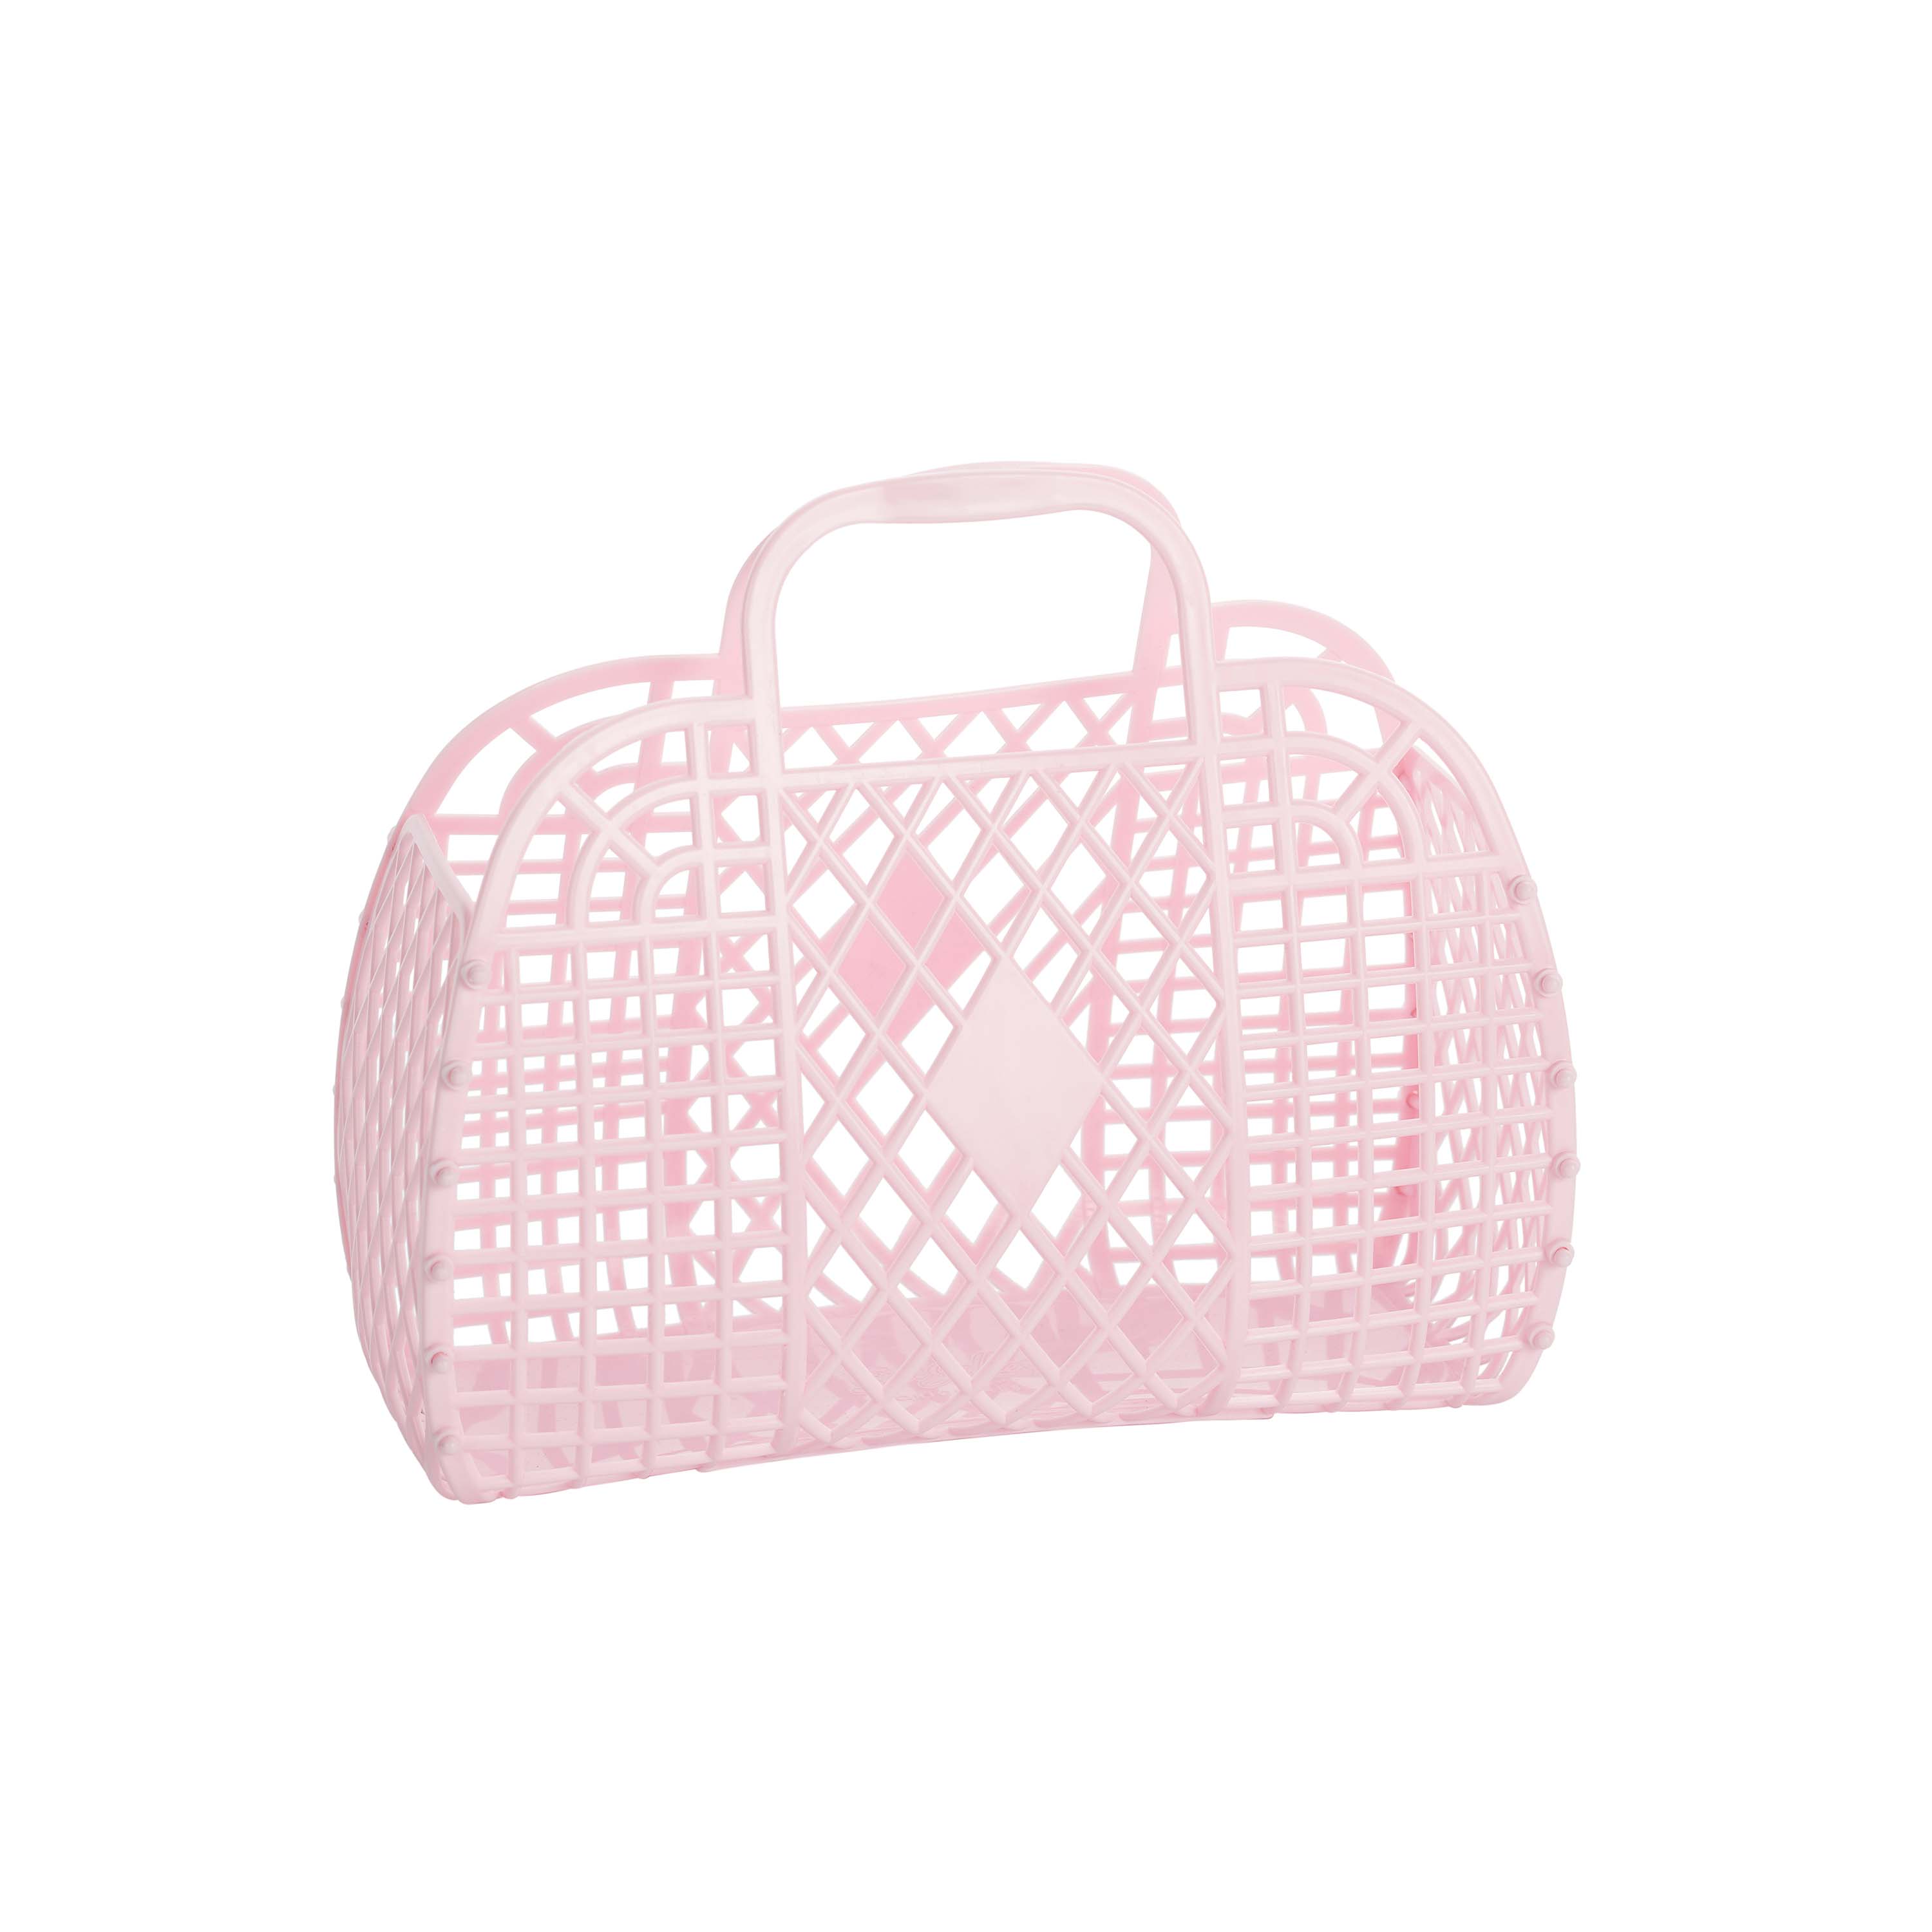 Sun Jellies small Retro Basket baby pink